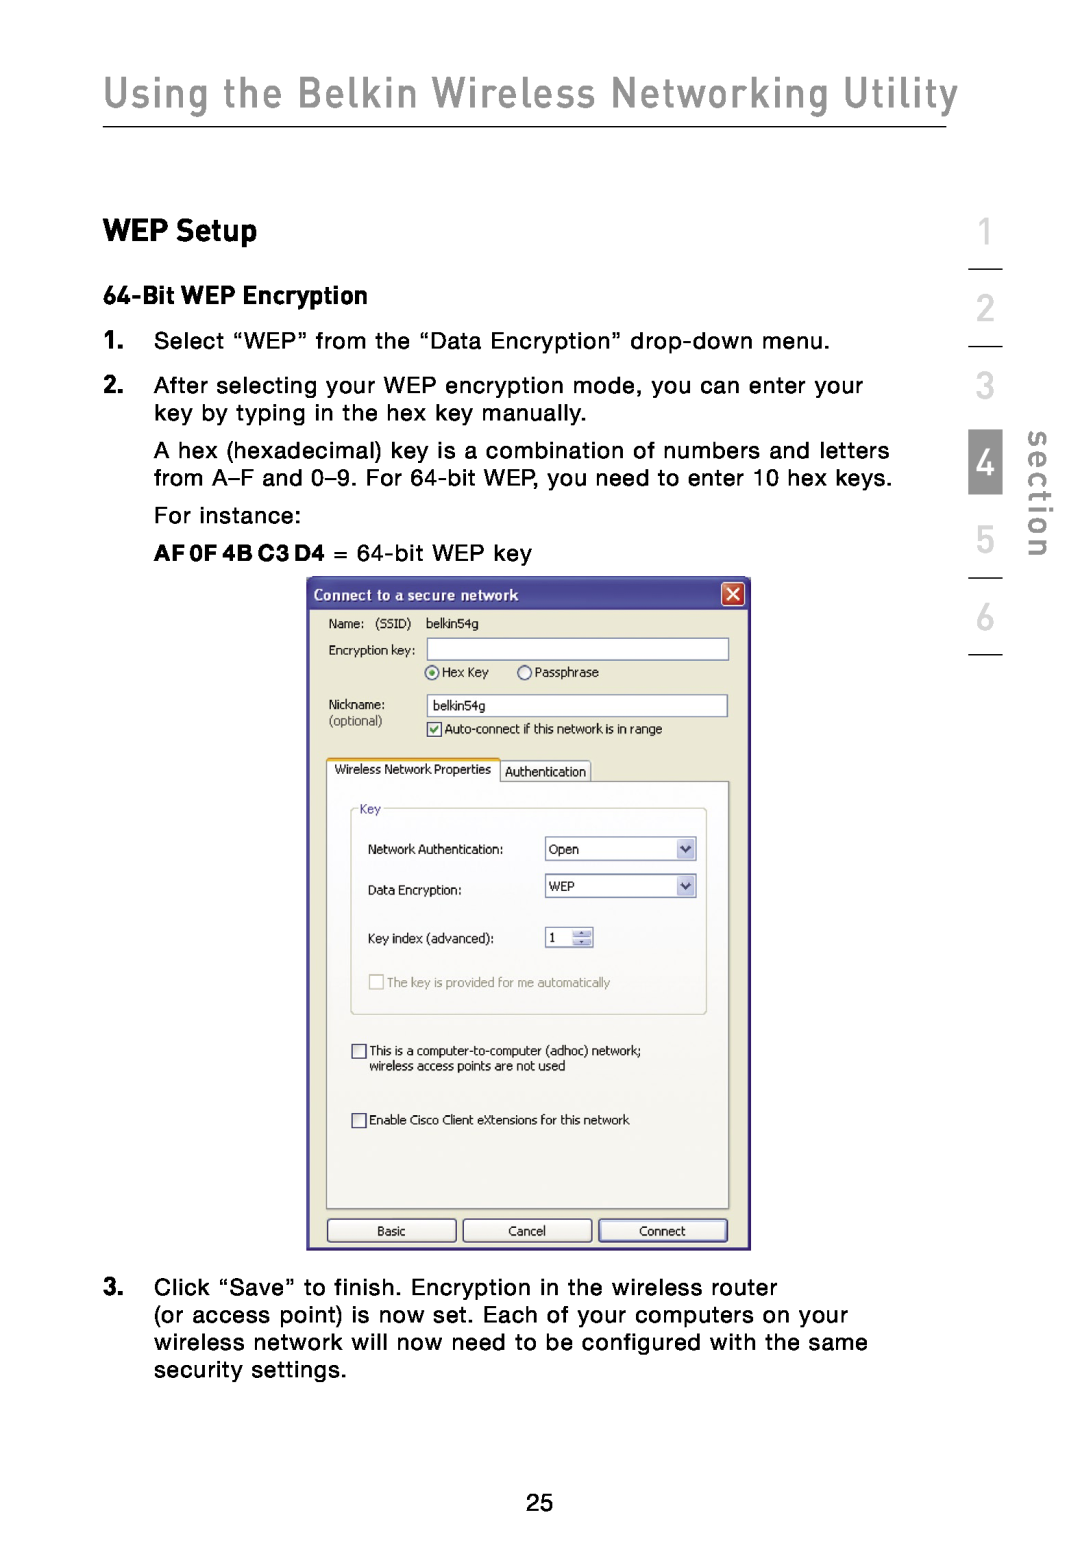 Belkin F5D8013 user manual WEP Setup, Bit WEP Encryption, Using the Belkin Wireless Networking Utility, section 